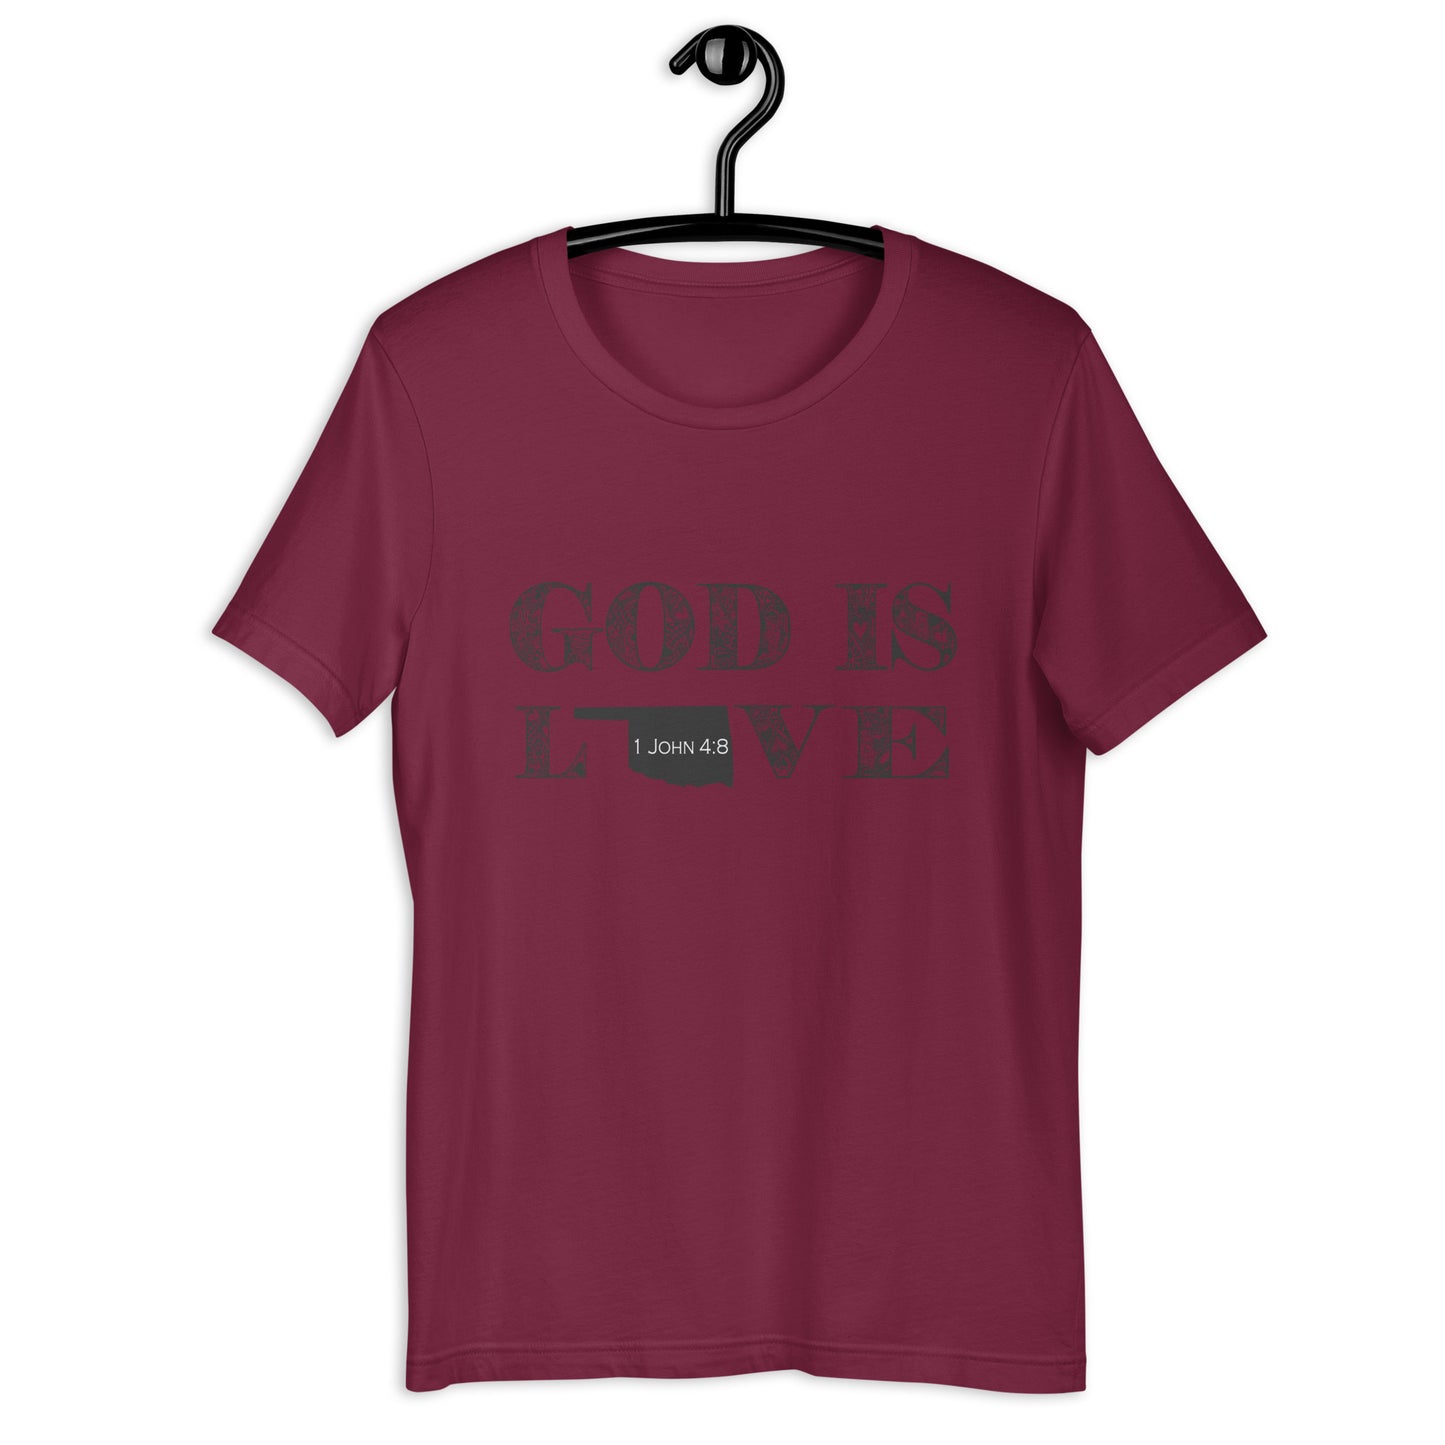 1 John 4:8 God is Love Unisex Oklahoma T-shirt in Maroon - front view on hanger